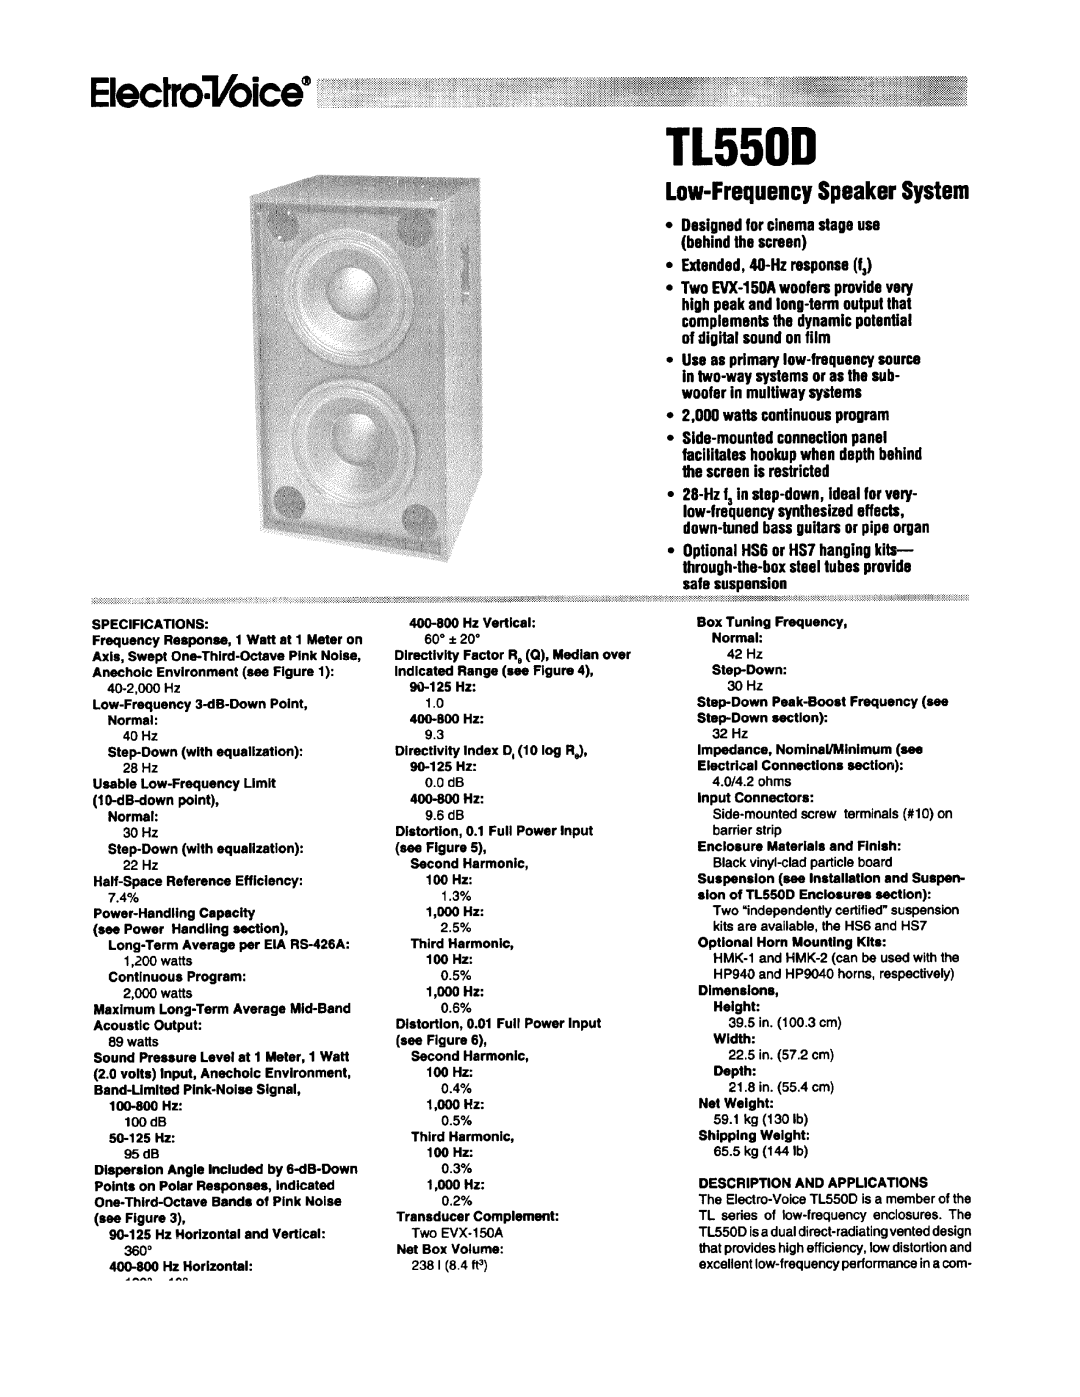 Electro-Voice TS550D manual 